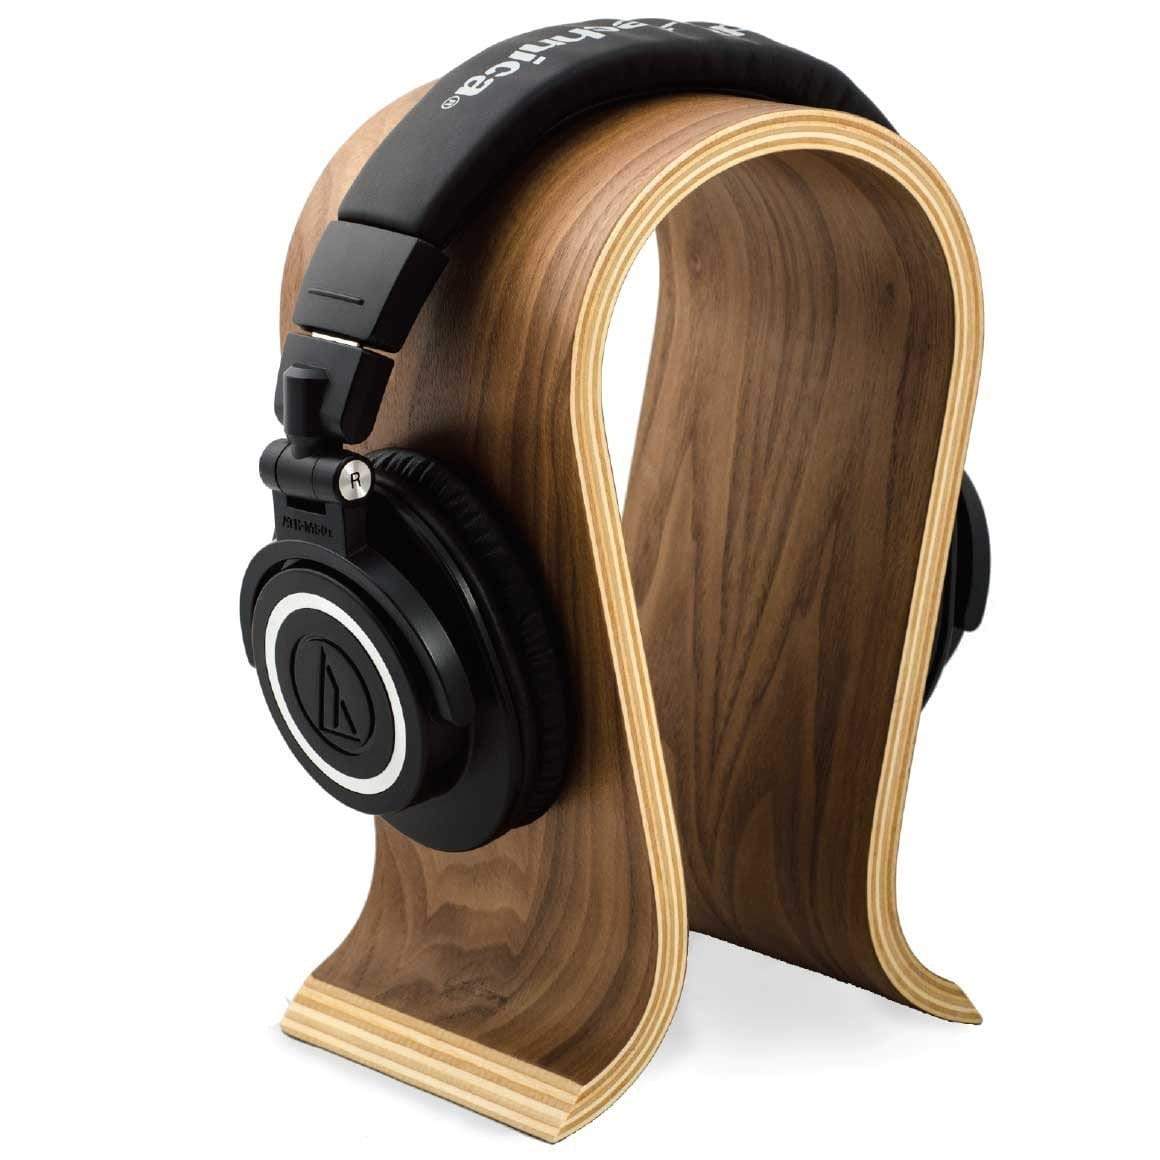 Headphone-Zone-Omega-Handcrafted Wooden Headphone Stand-Walnut